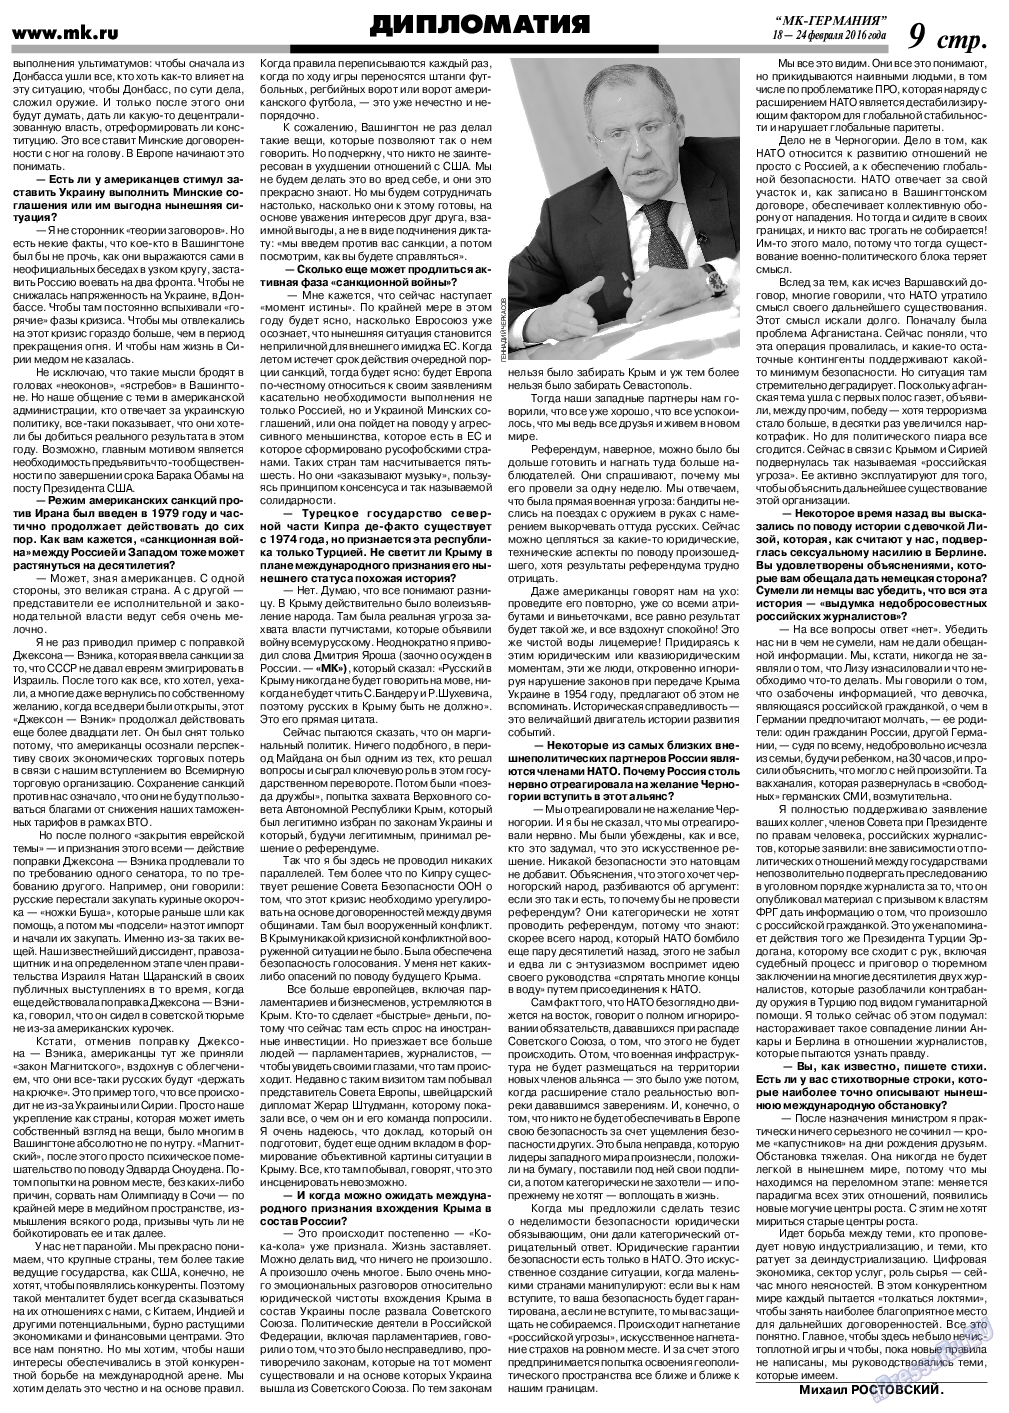 МК-Германия, газета. 2016 №8 стр.9